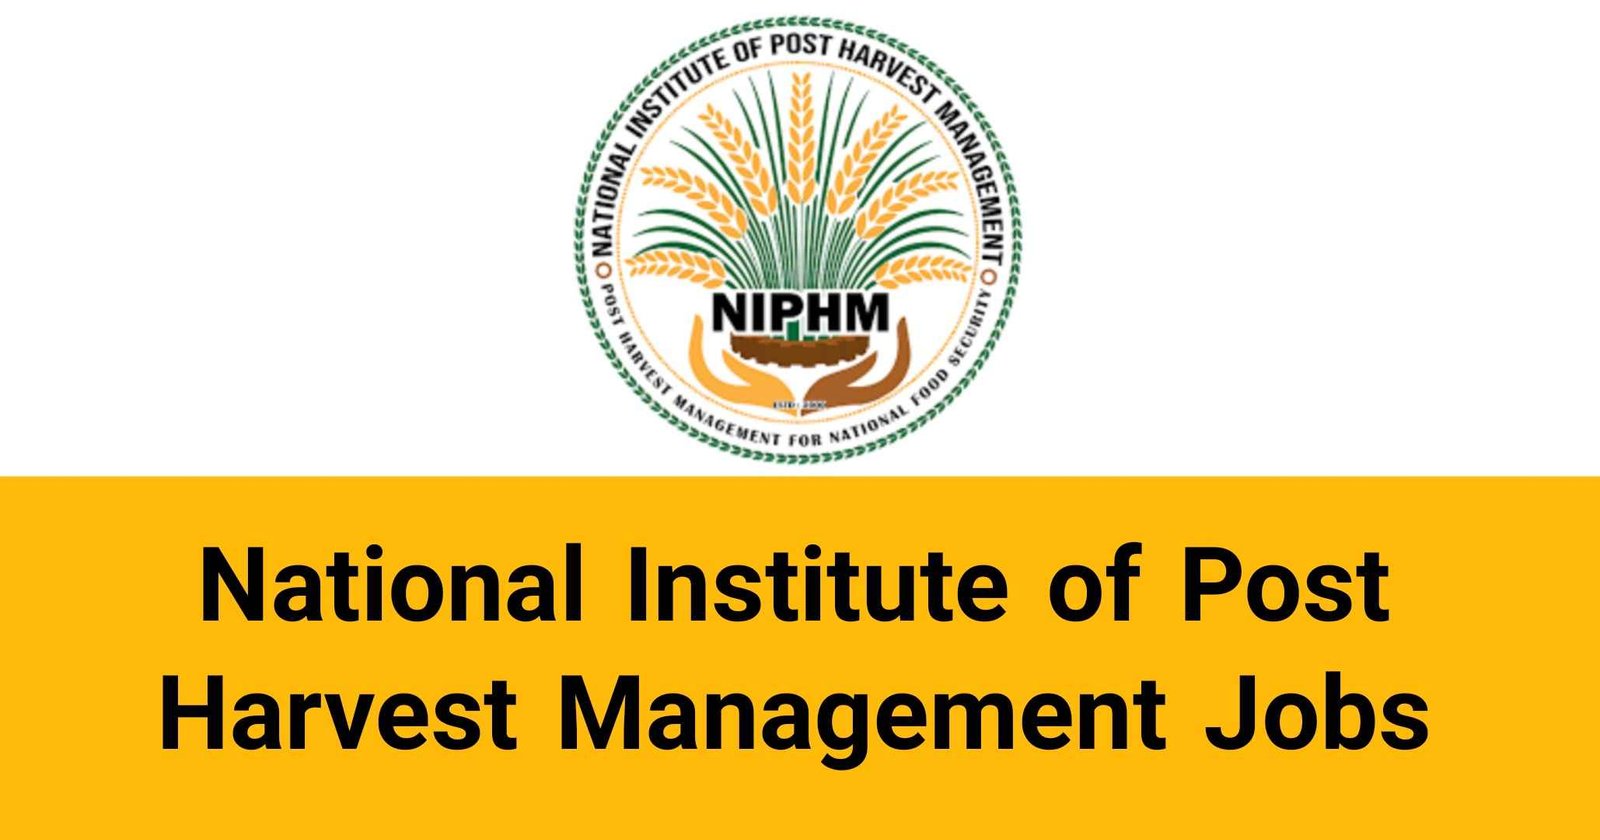 National Institute of Post Harvest Management Jobs Vacancies Careers